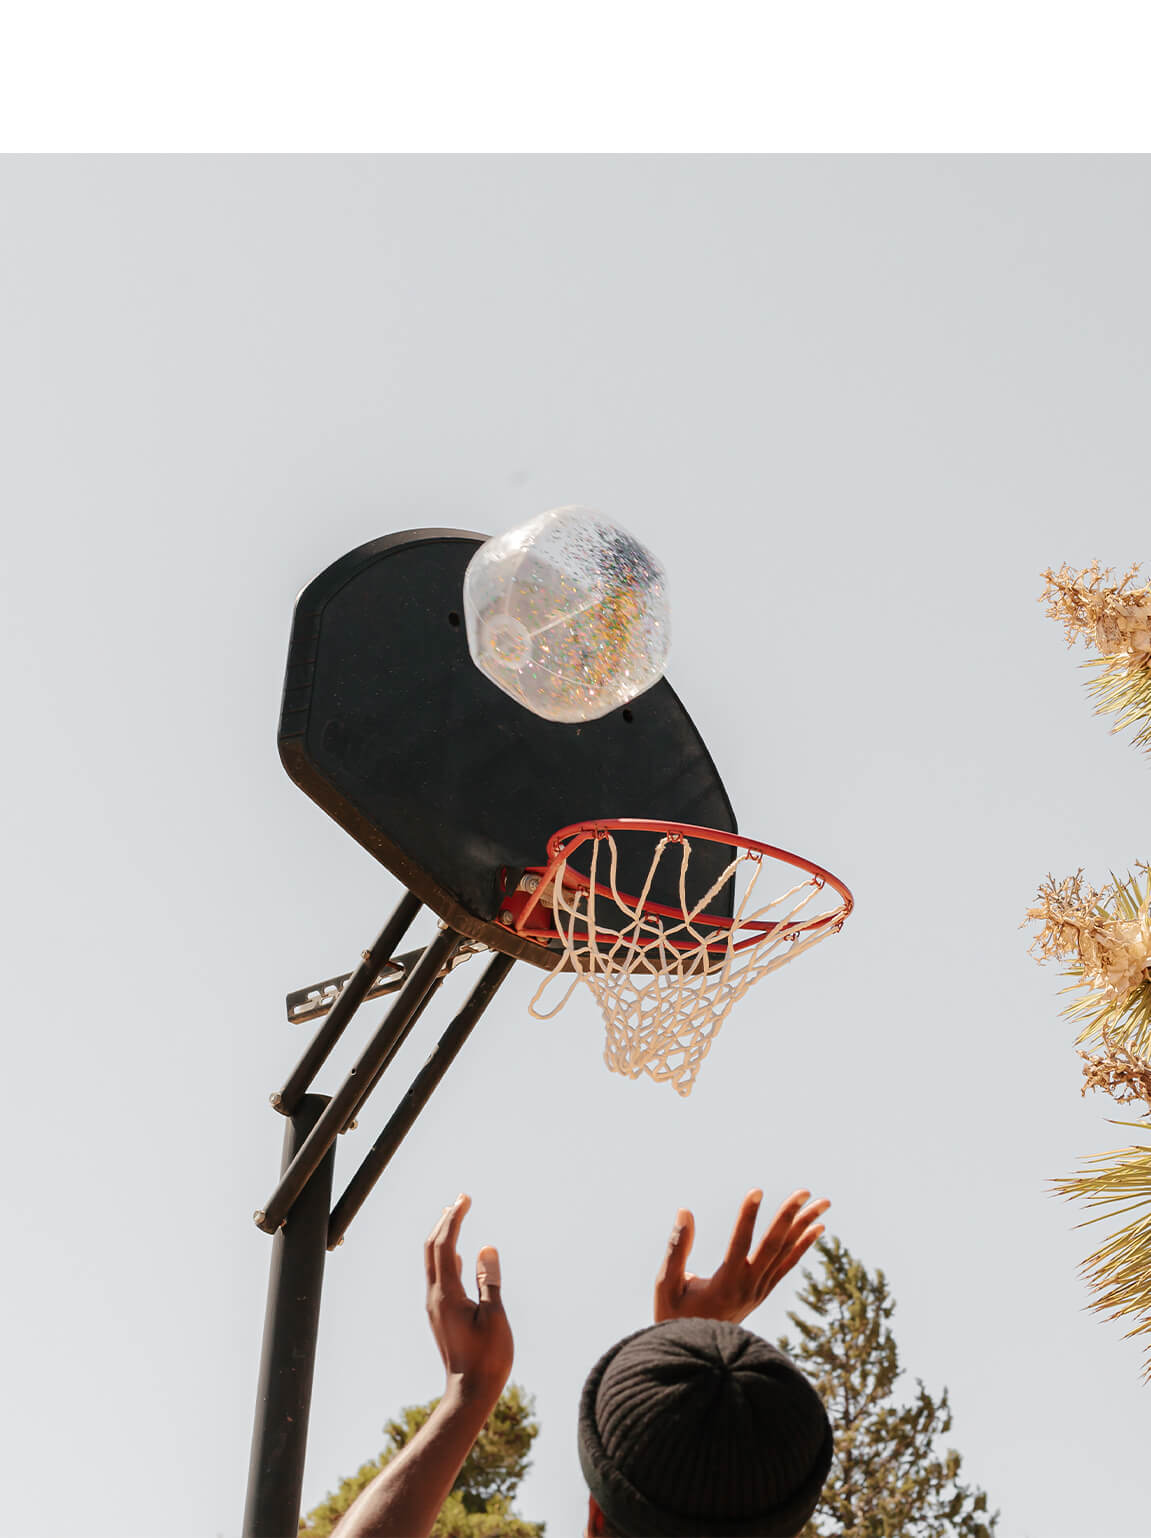 Photo by Brandon Lopez of hands shooting glittery beach ball into basketball hoop